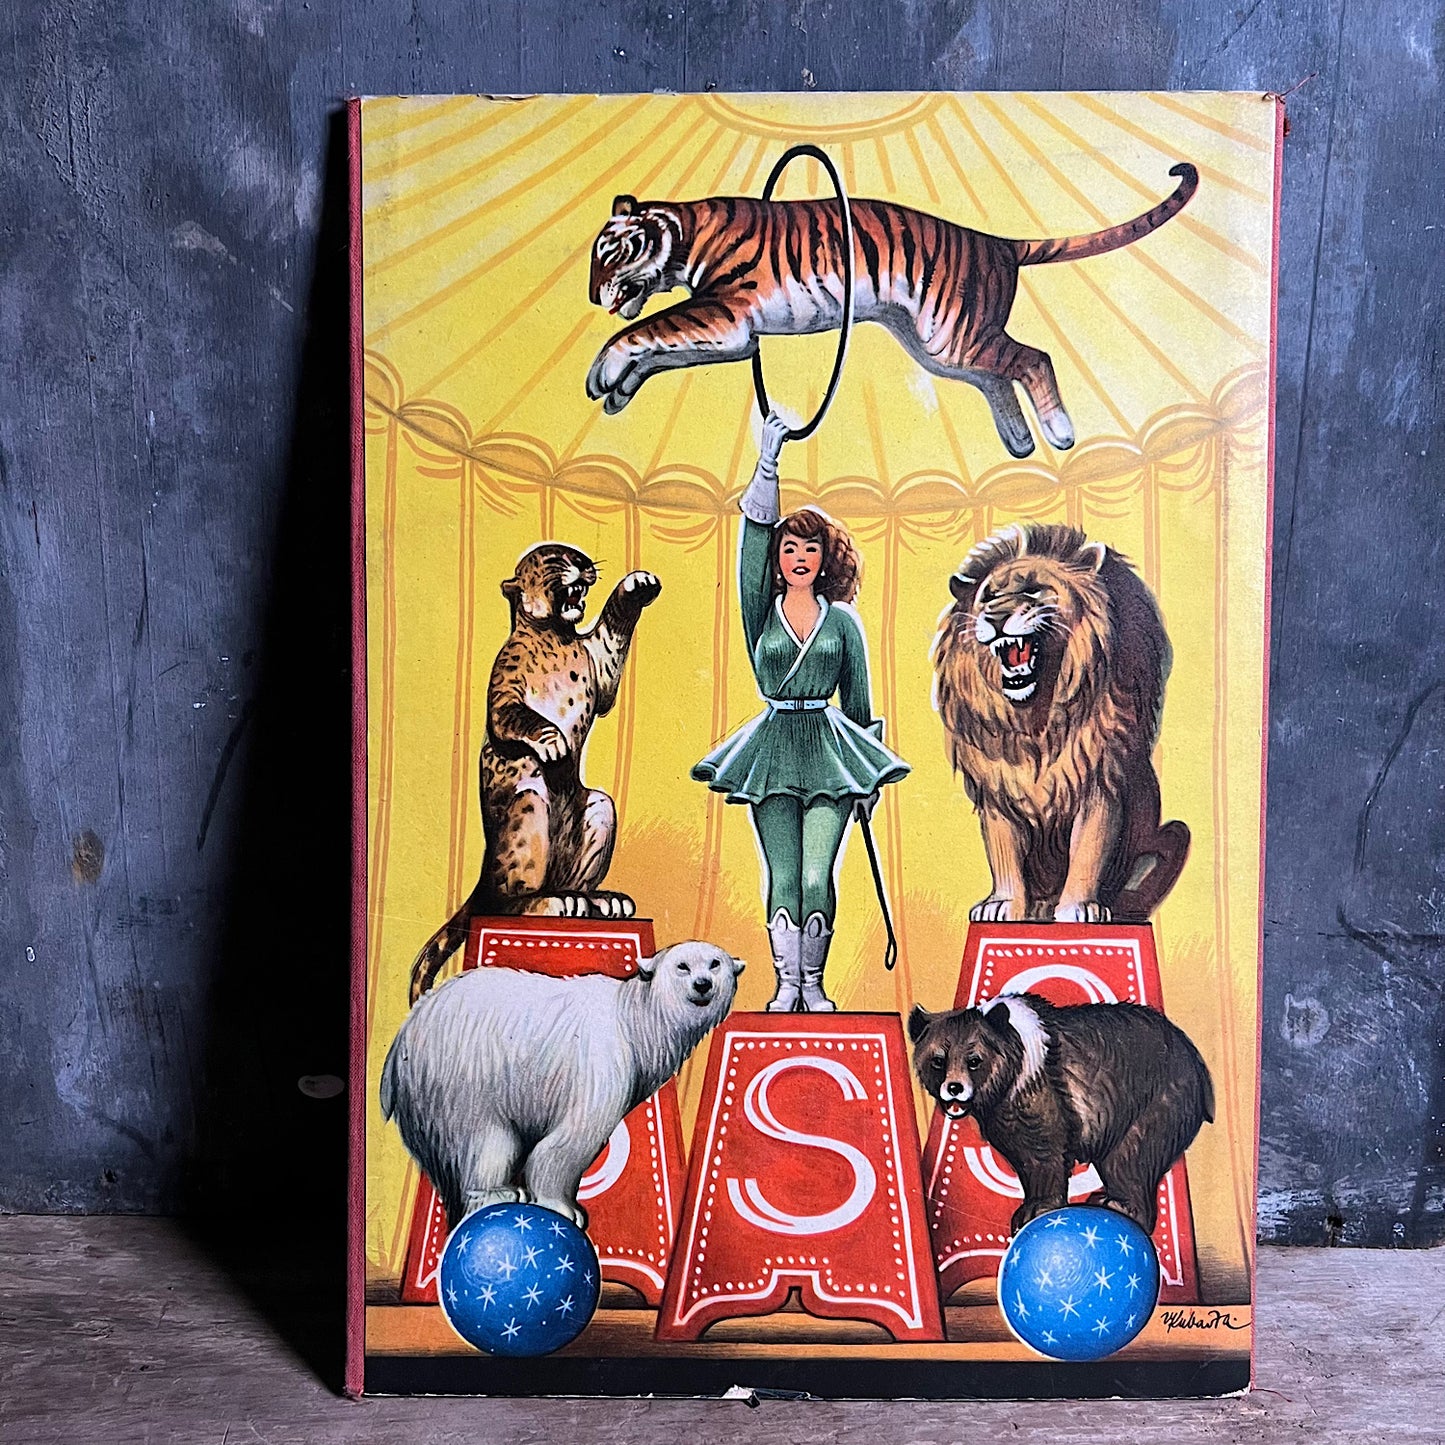 Rare Pop Up Book “Tony and the Circus Boy”  by Kubasta c.1960